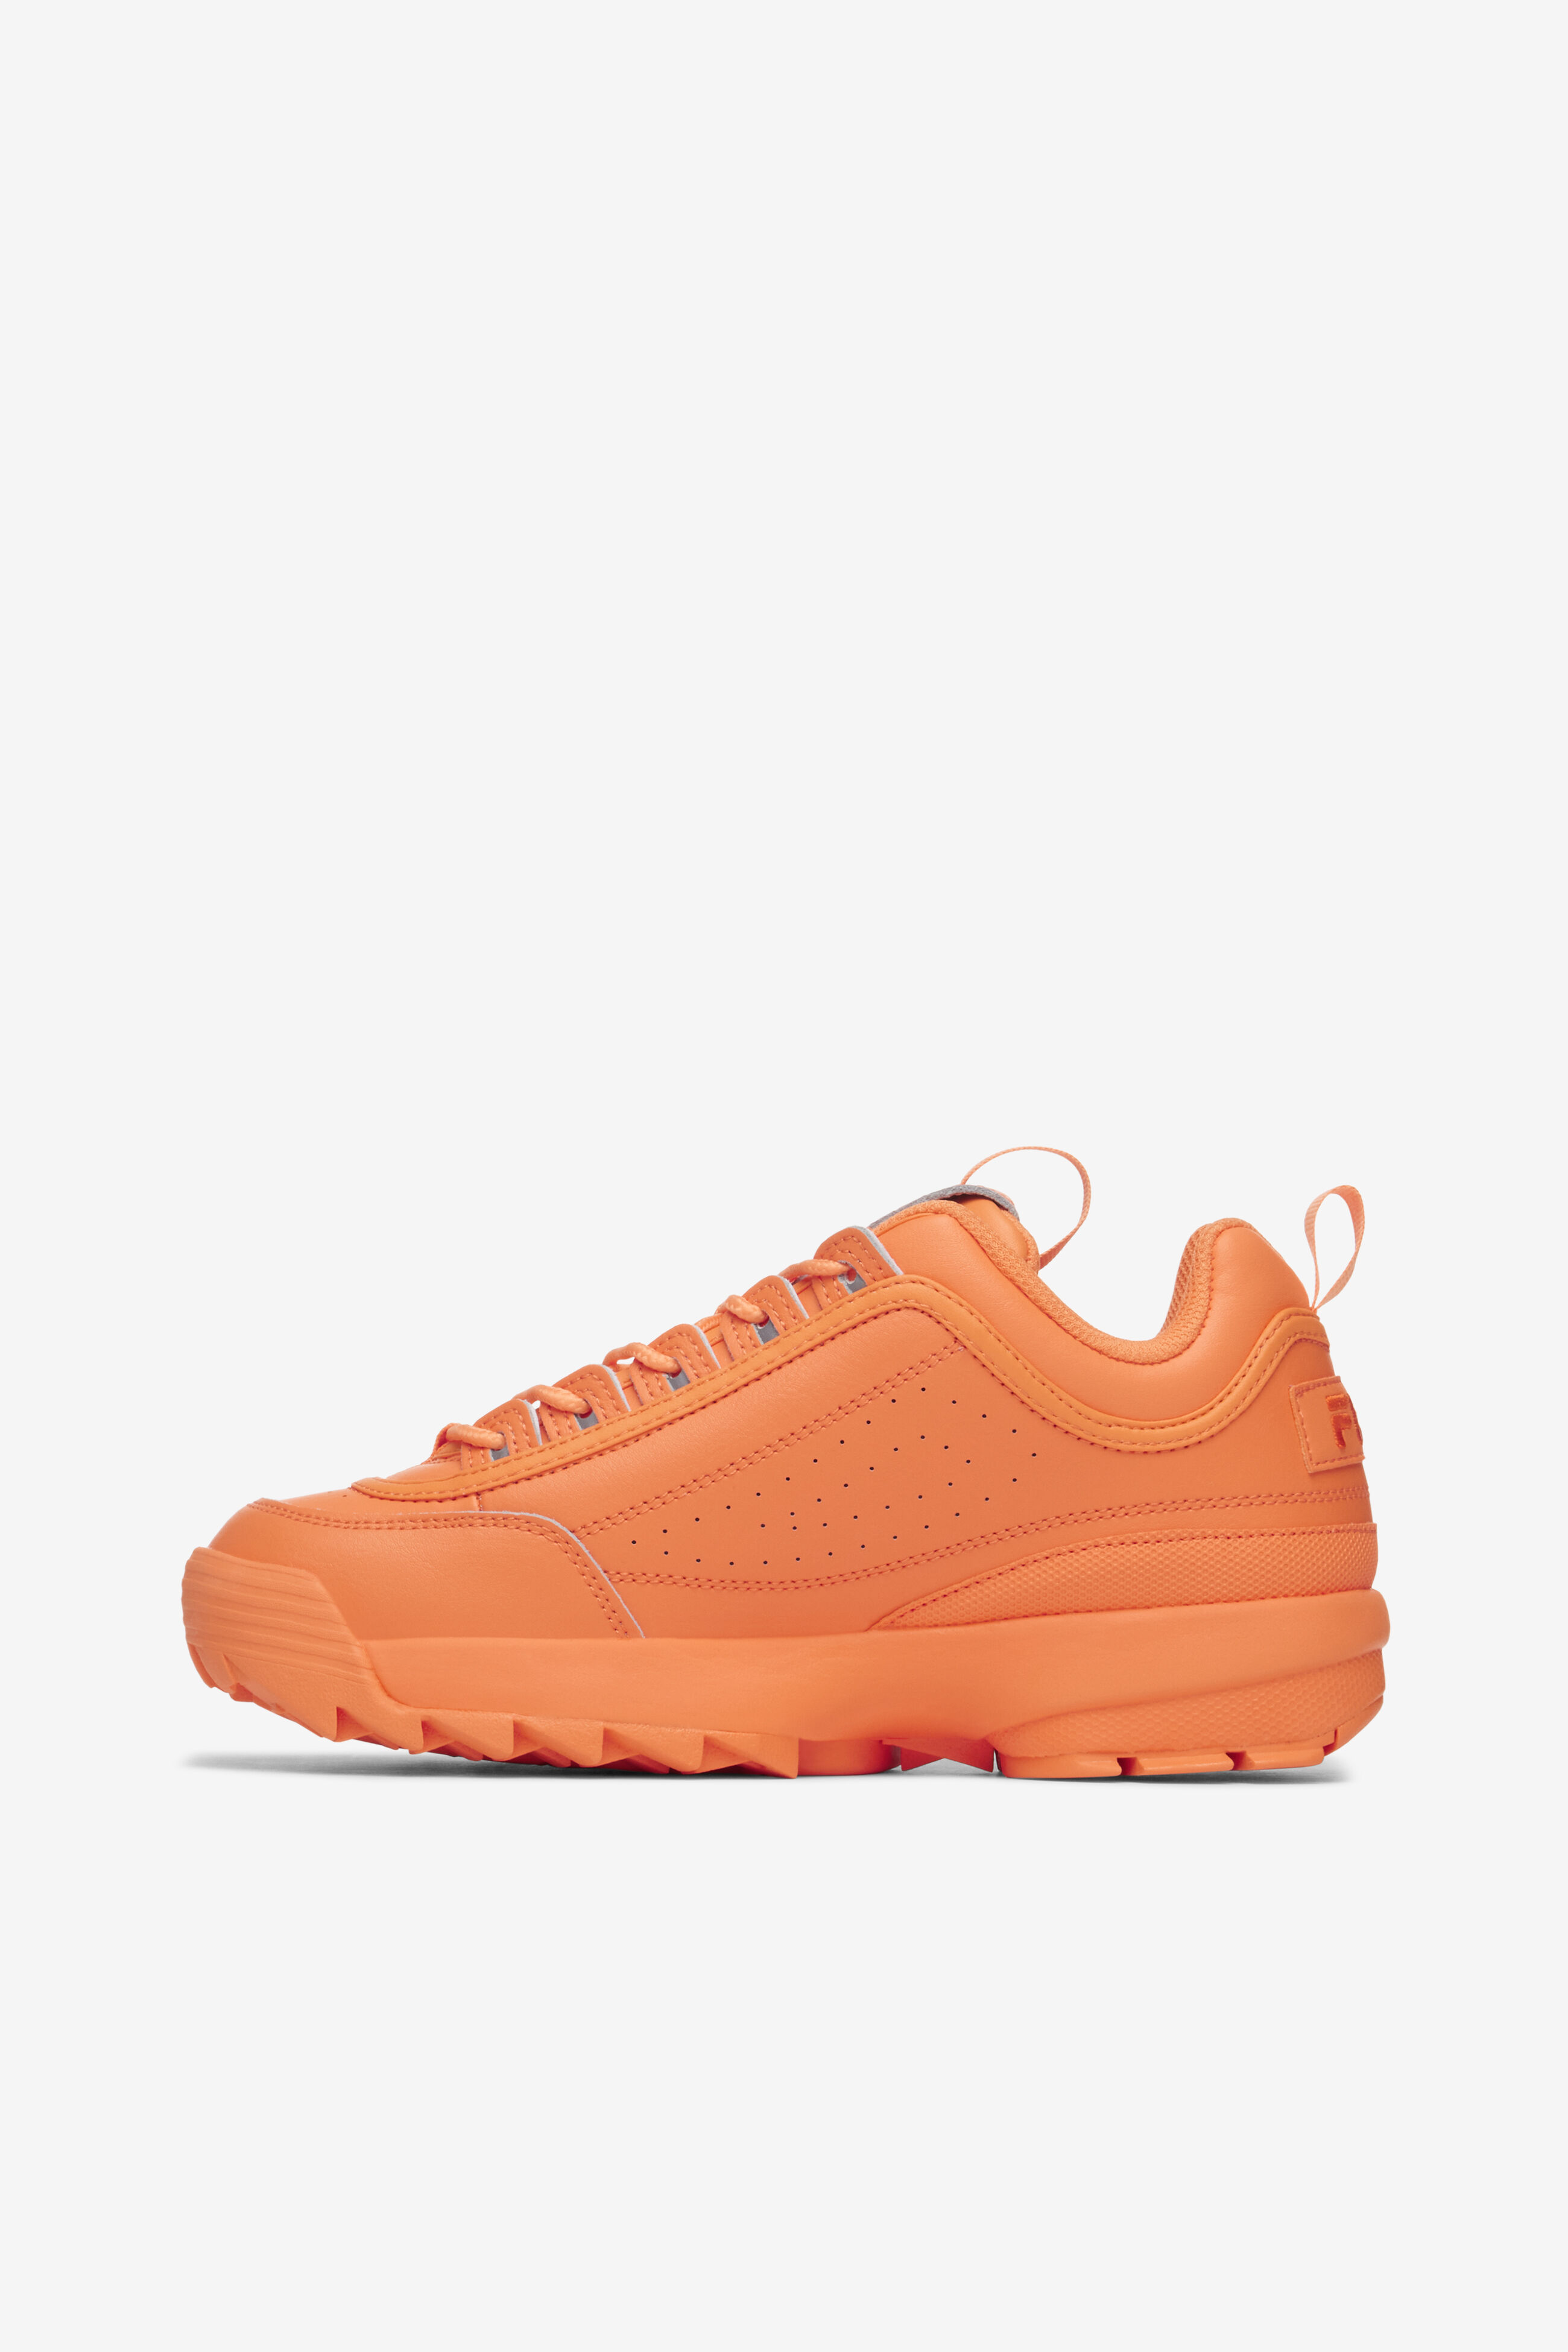 Fila Grant Hill 2 Basketball Shoes Women Size 8 (5BM01877-800) Orange Glo |  eBay